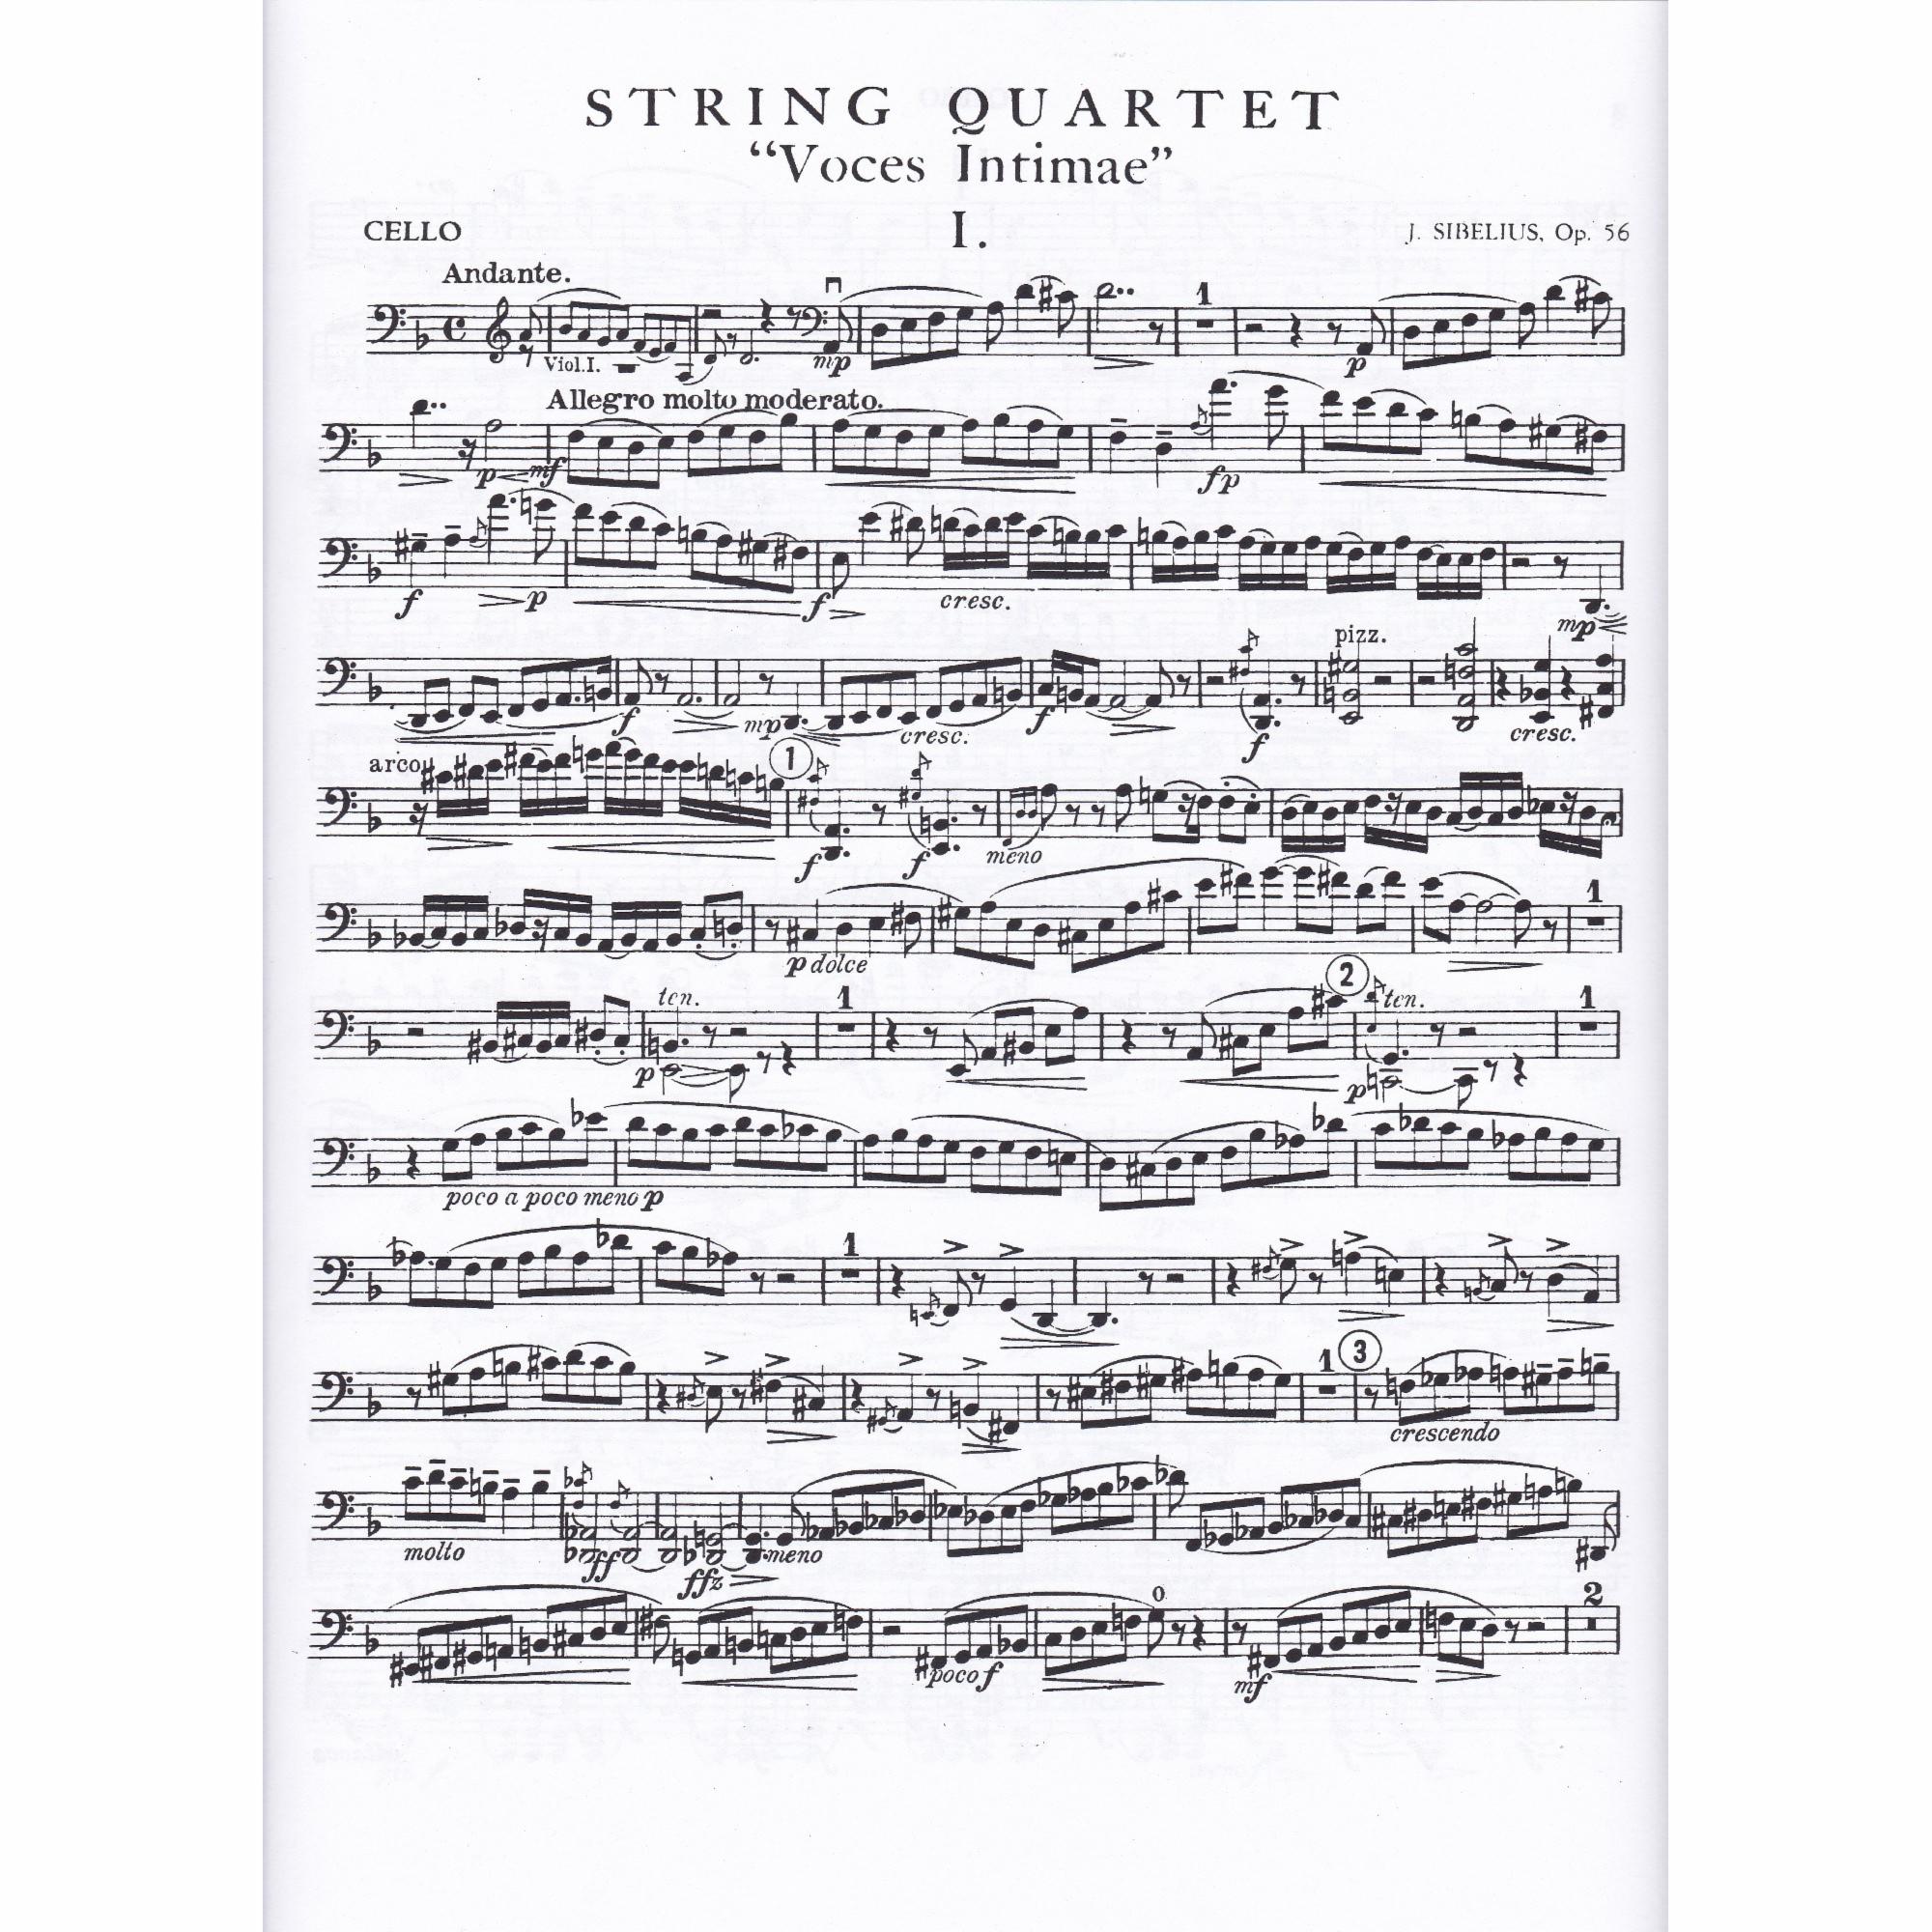 String Quartet in D minor, Op. 56